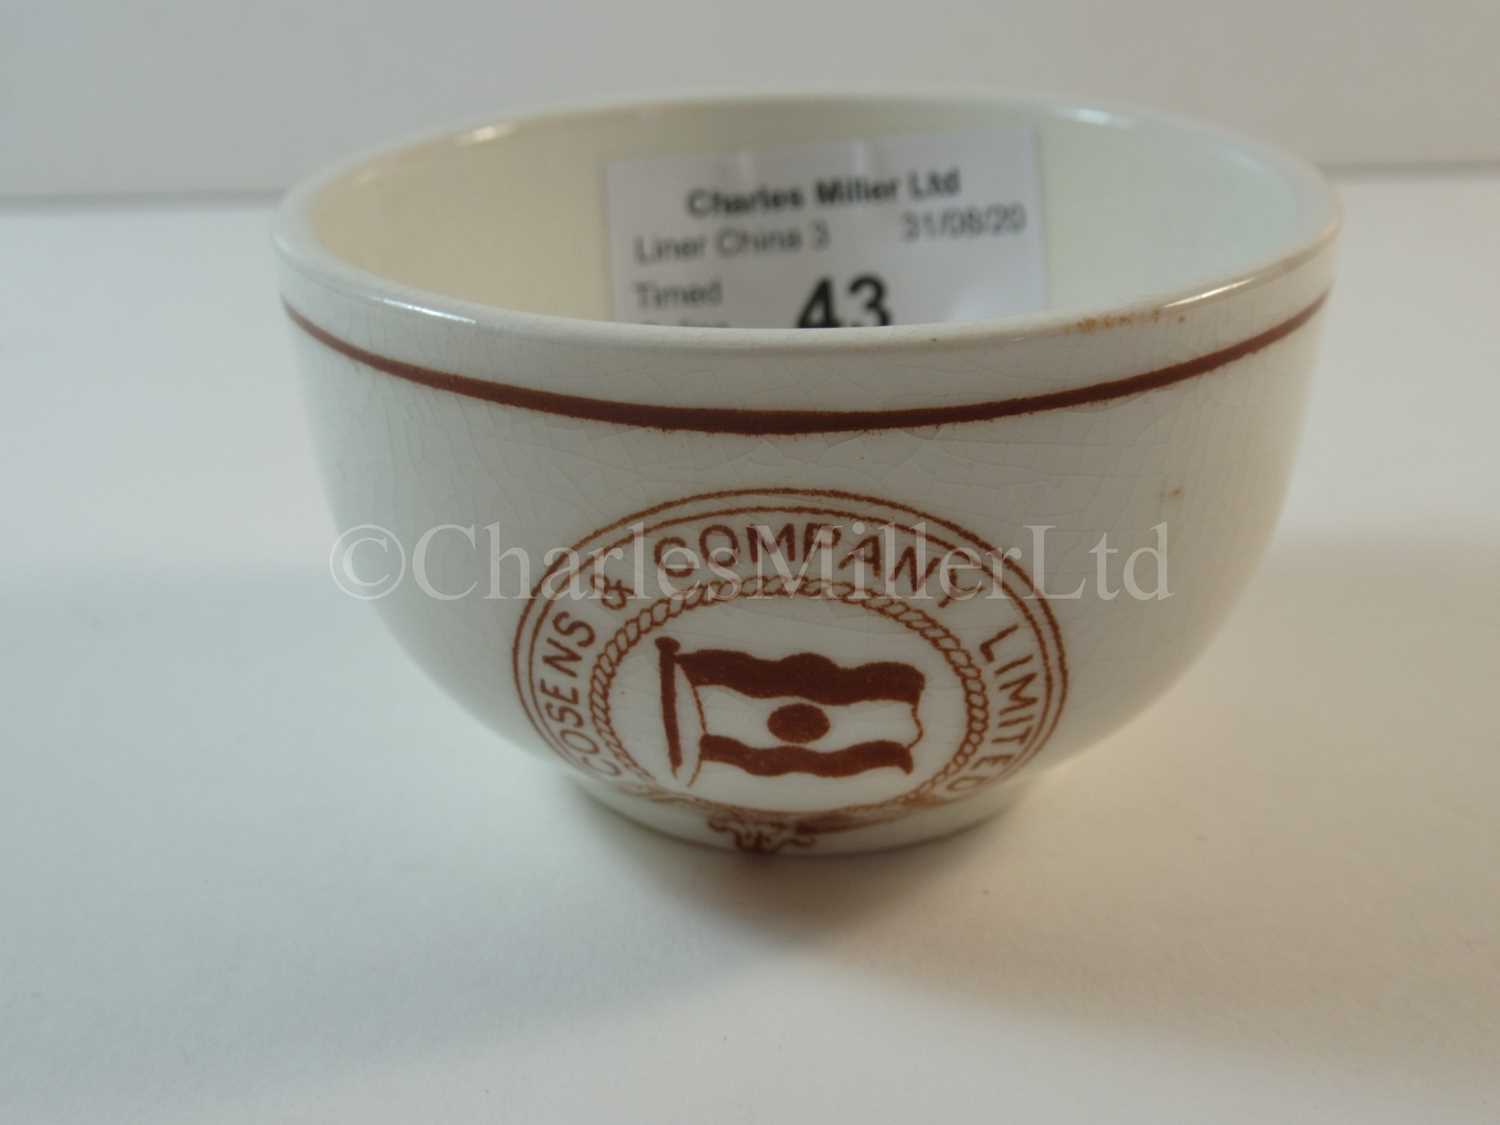 Lot 43 - A Cosens & Company Limited slop bowl